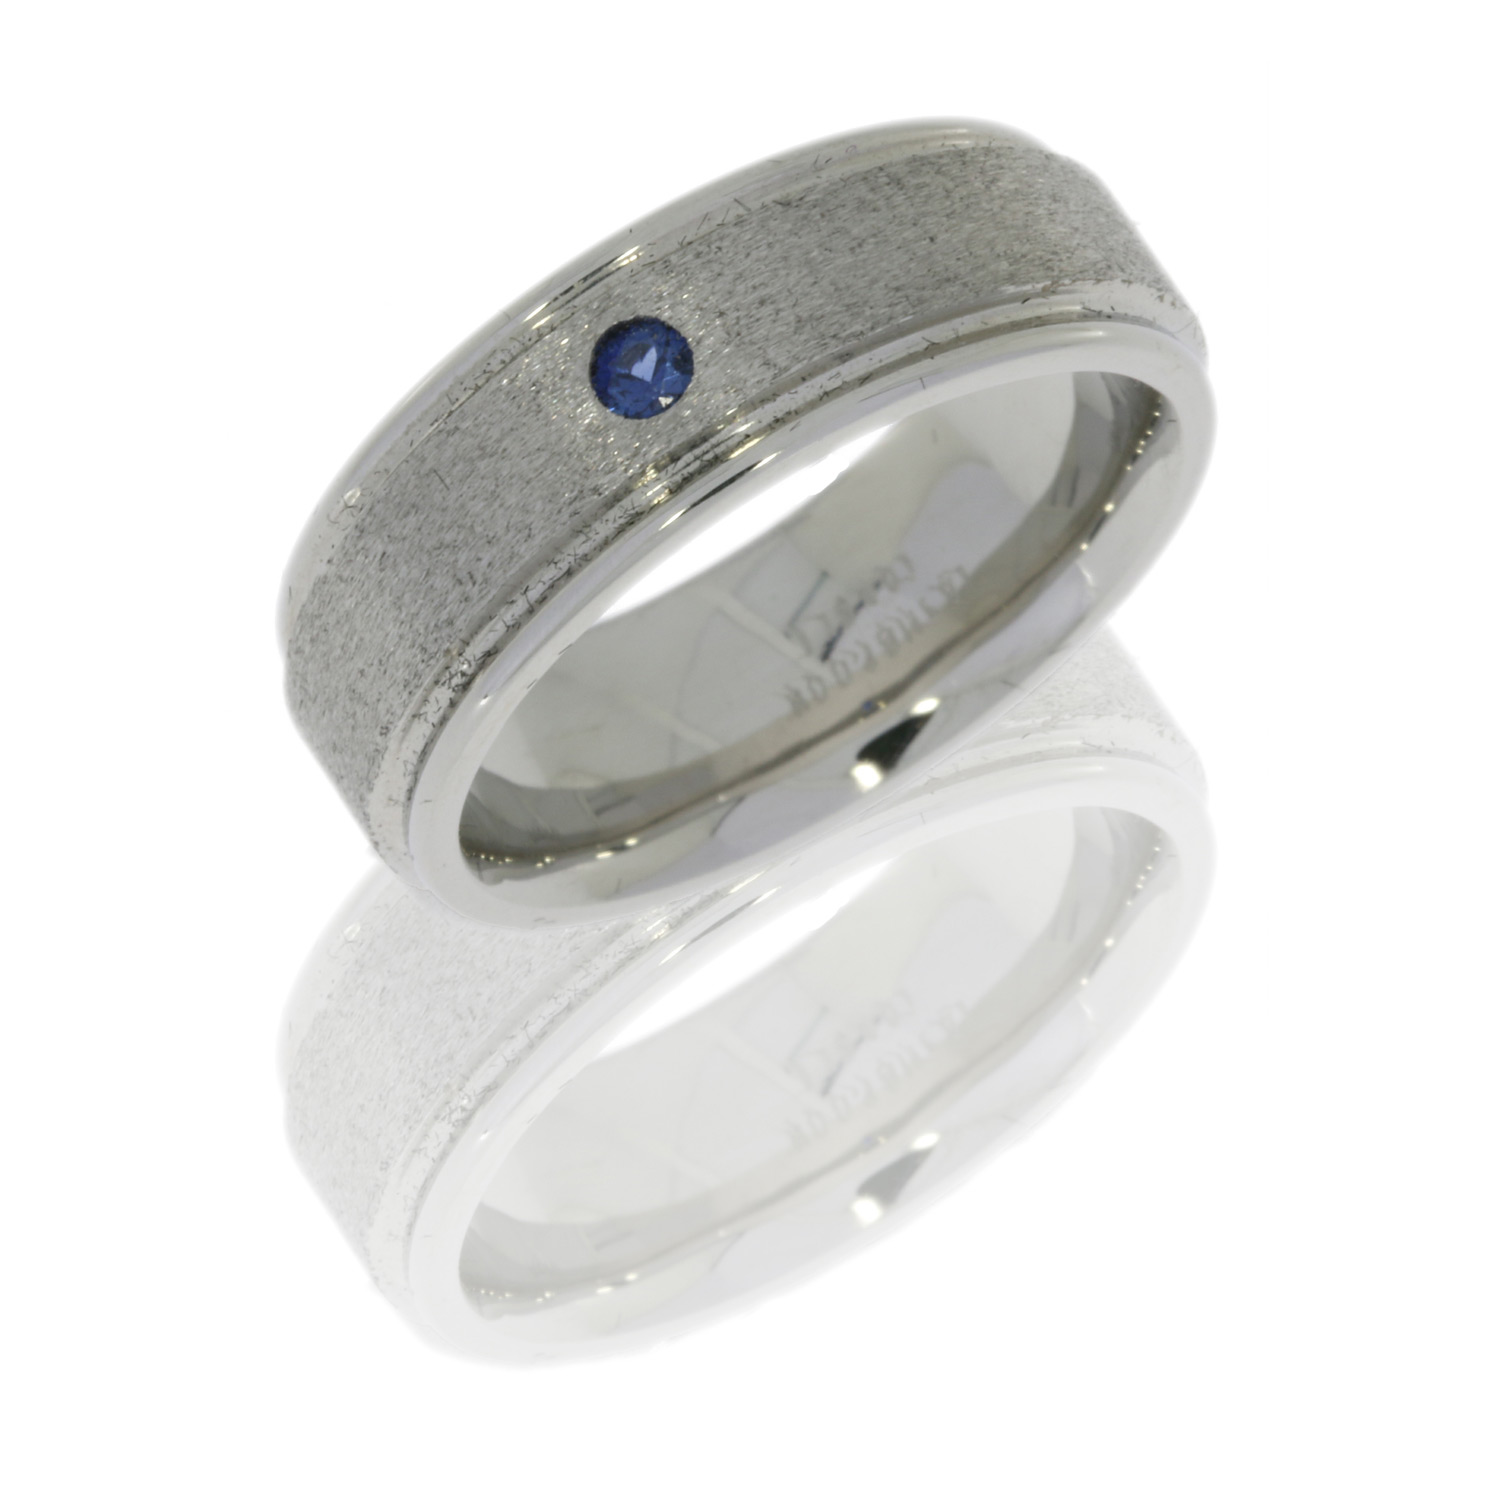 Lashbrook CC8REFSAPPH.07F STONE-POLISH Cobalt Chrome Wedding Ring or Band